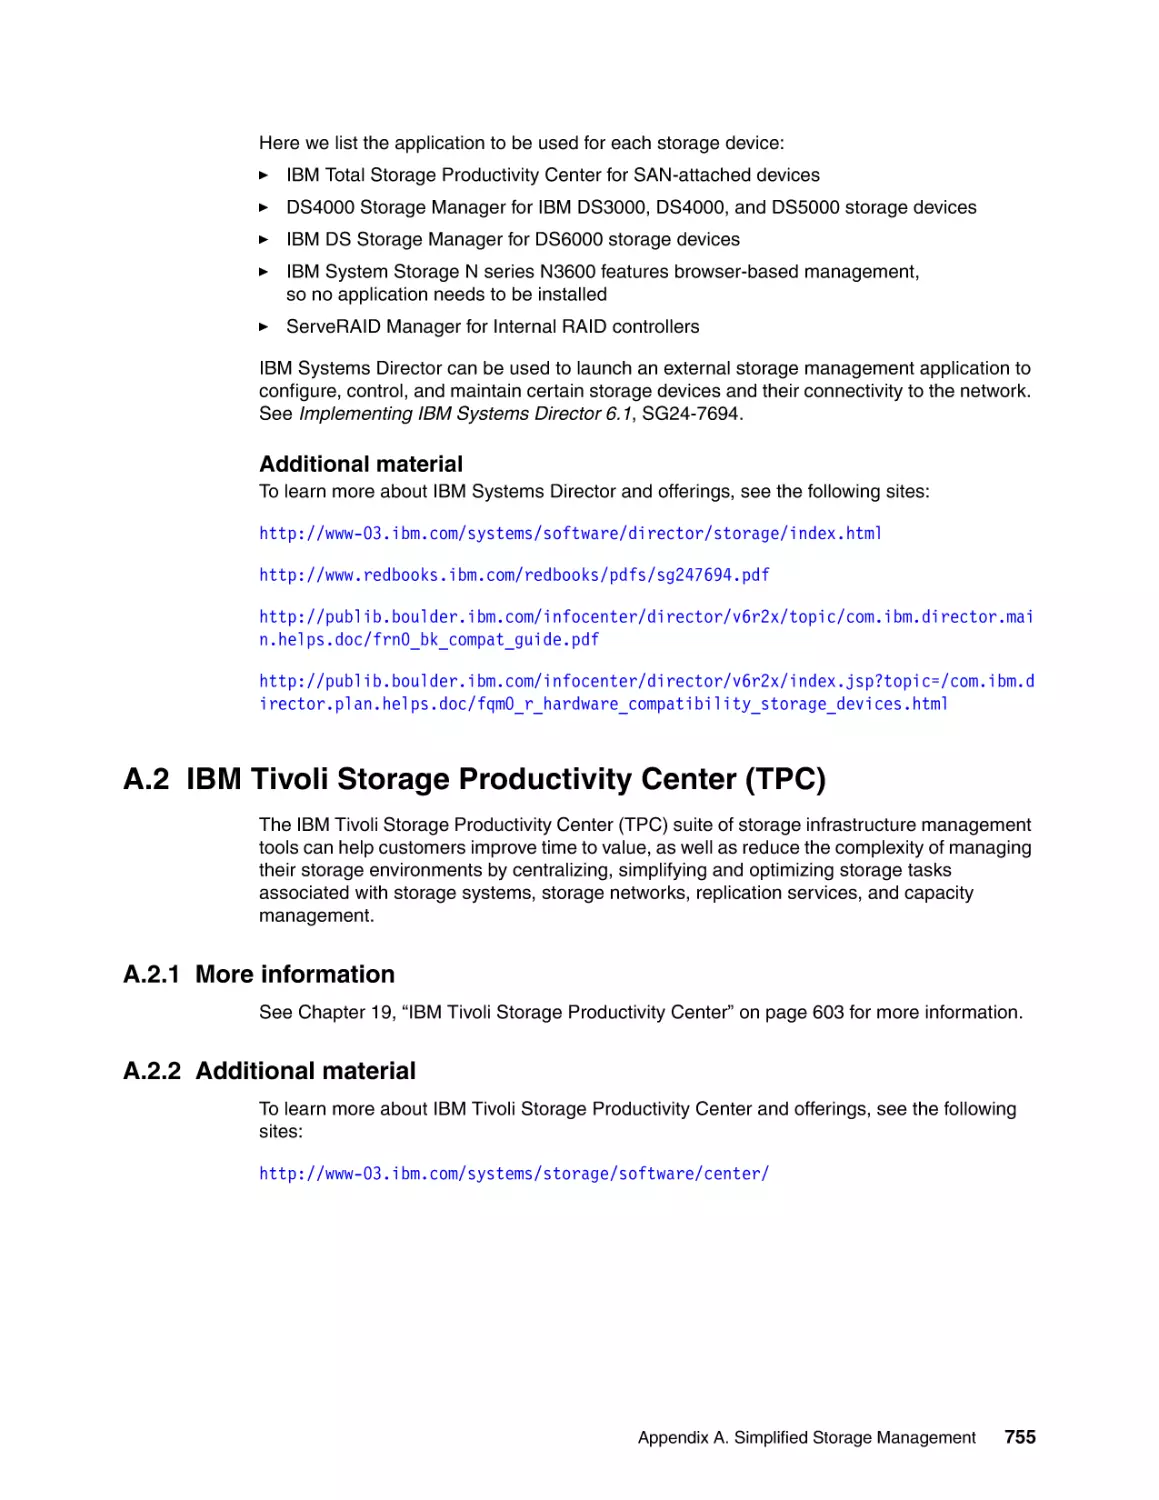 A.2 IBM Tivoli Storage Productivity Center (TPC)
A.2.1 More information
A.2.2 Additional material